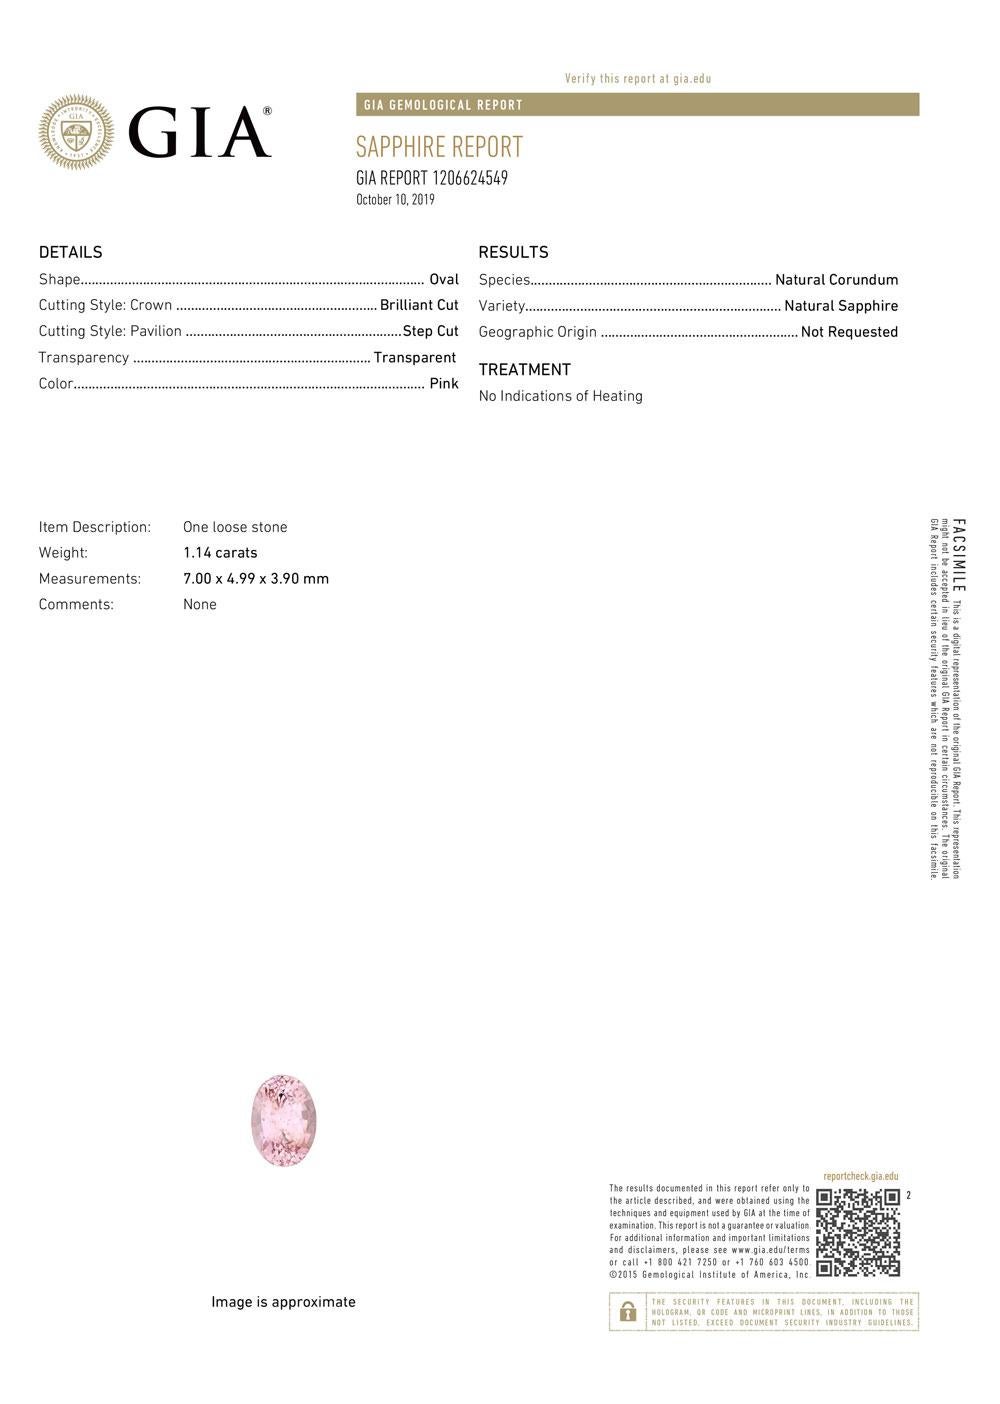 Saphir rose de forme ovale de 1,14 carat, certifié GIA, non chauffé Unisexe en vente